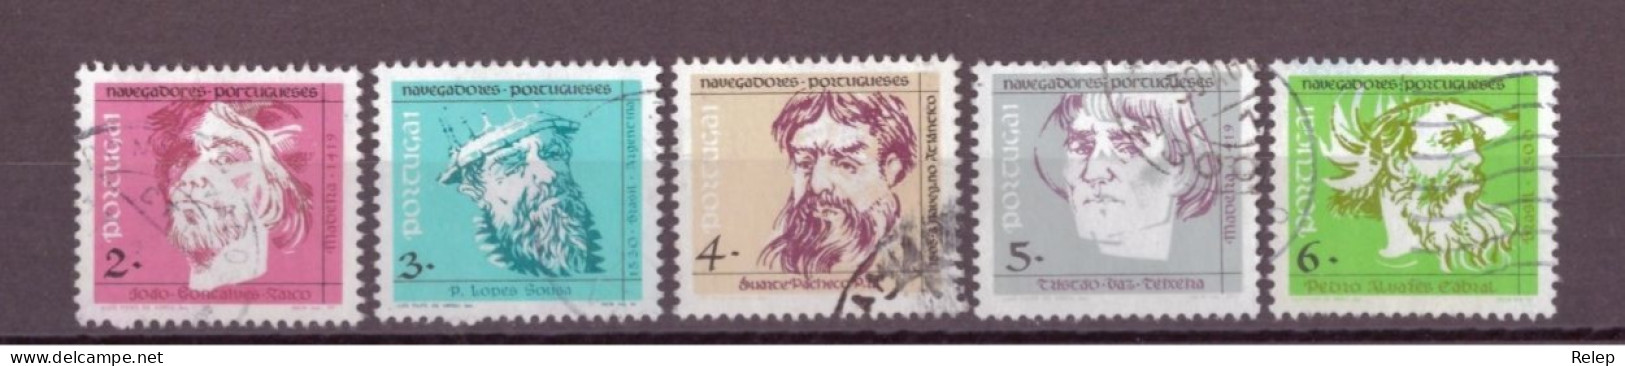 1990-94 - Navigateurs Portugais  / Portuguese Navigators -19 Values Used -TB- Cote €14.45 - Used Stamps